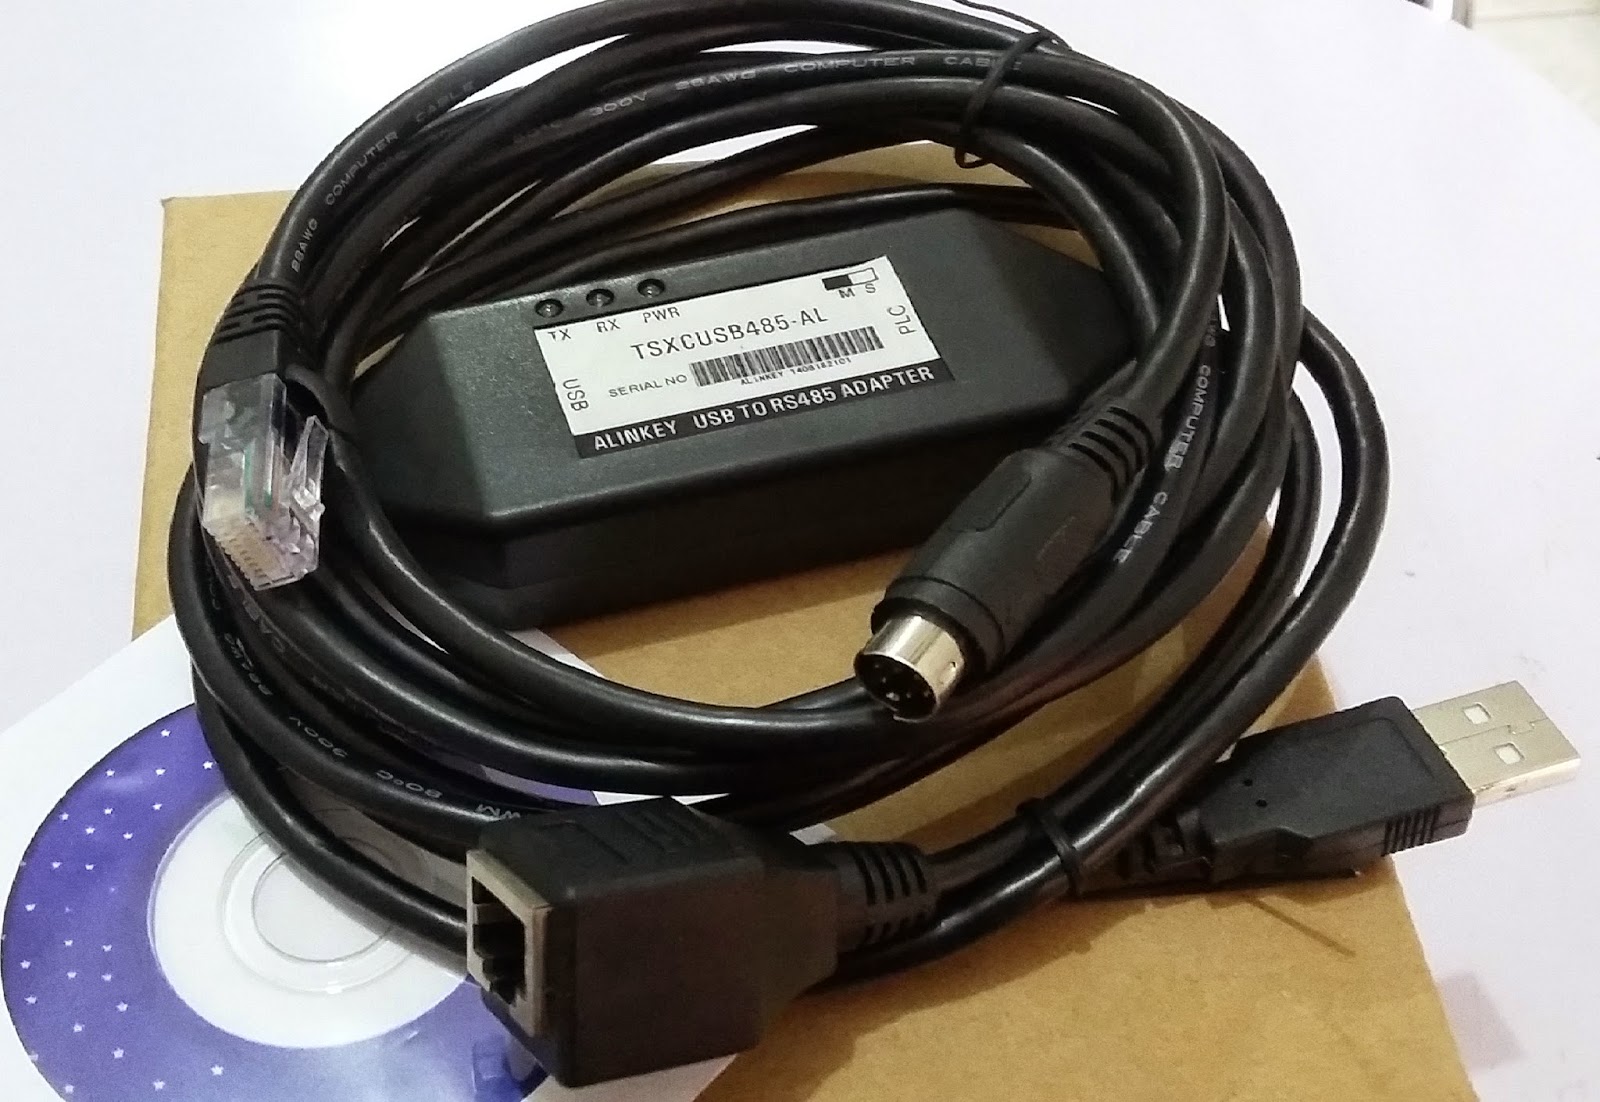 Kabel Data substitusi Schneider TSXCUSB485C